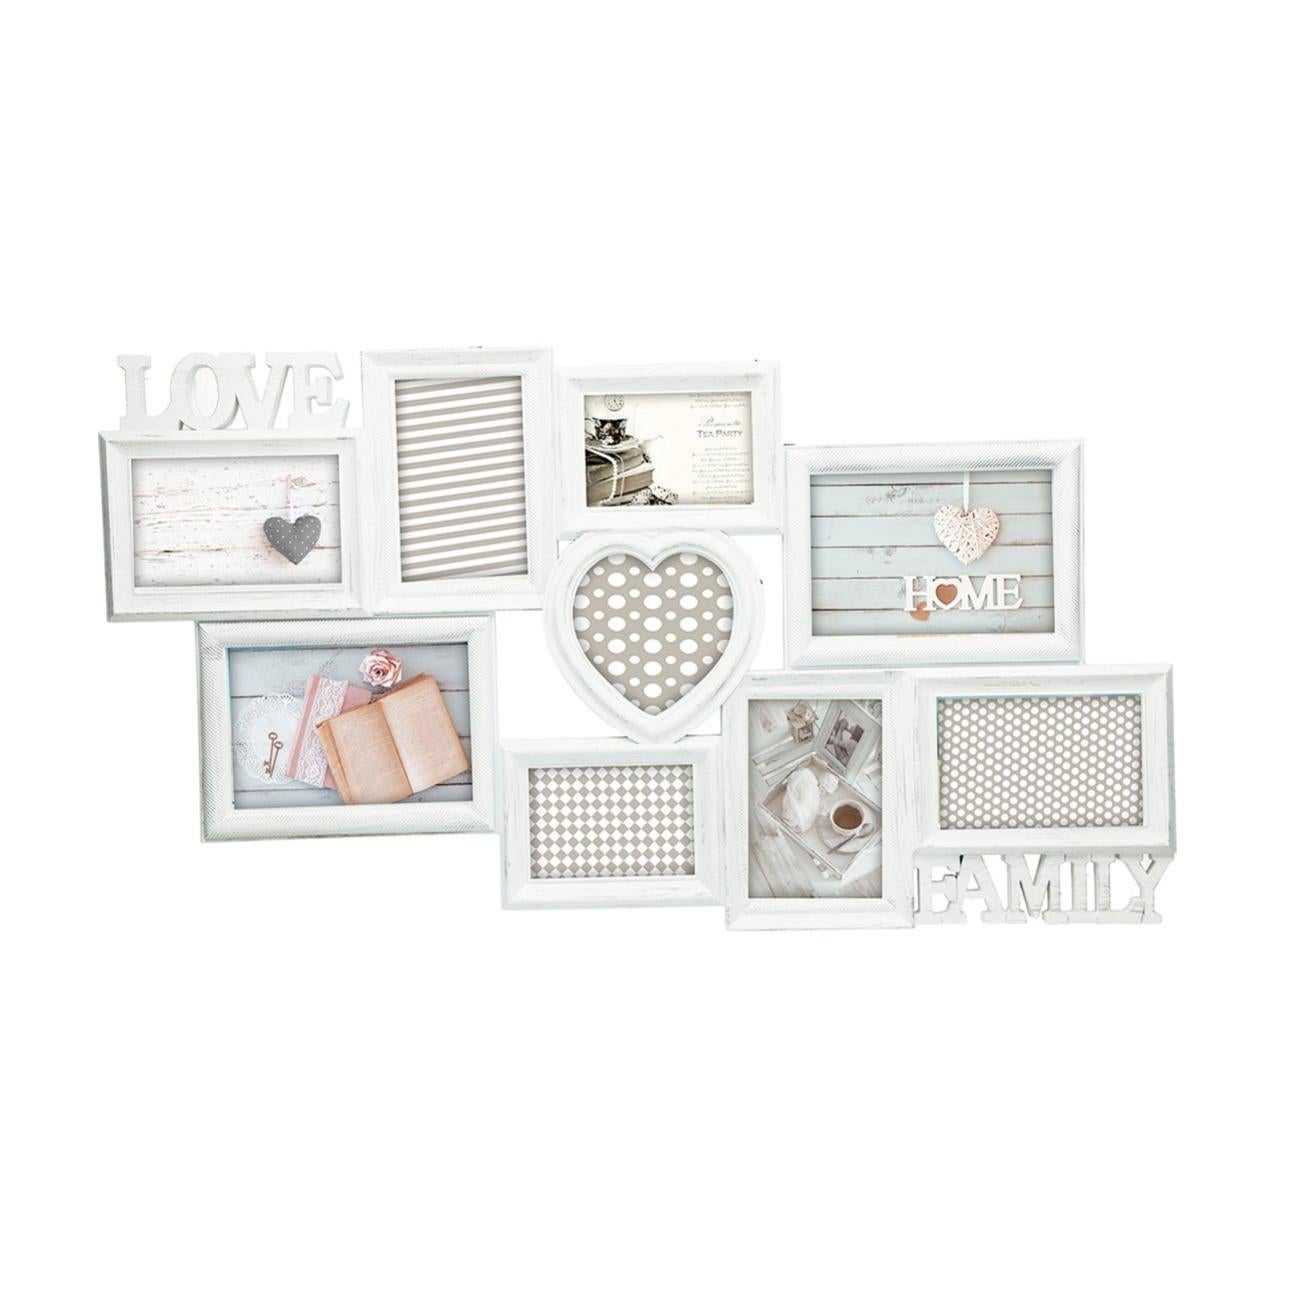 Cornice Love & family shabby, bianco misure 31.5 x 73.5 cm per 9 fotografie